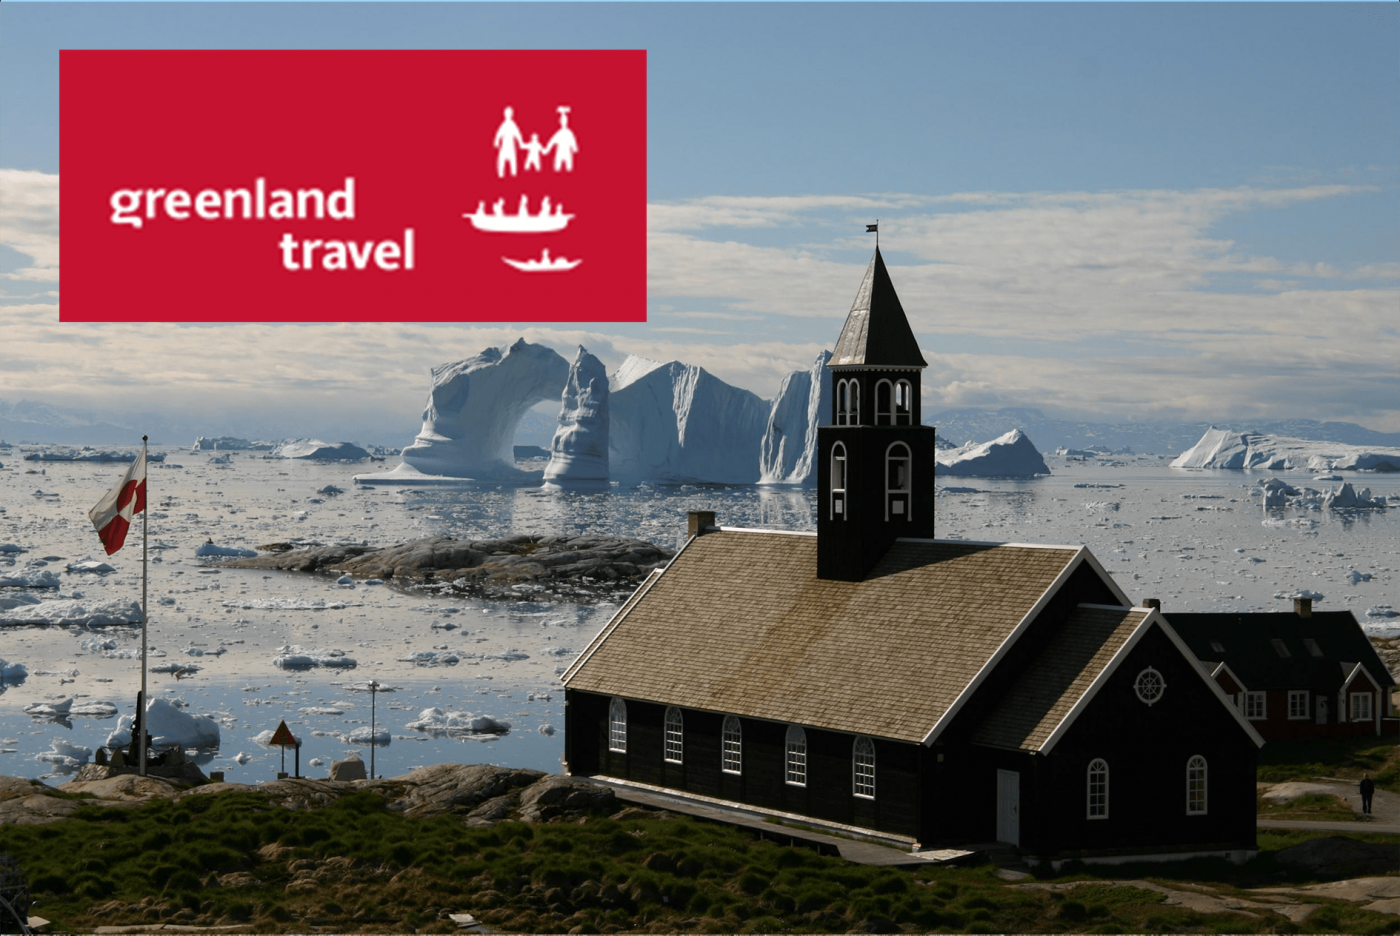 Greenland Travel: Summer impressions in Greenland